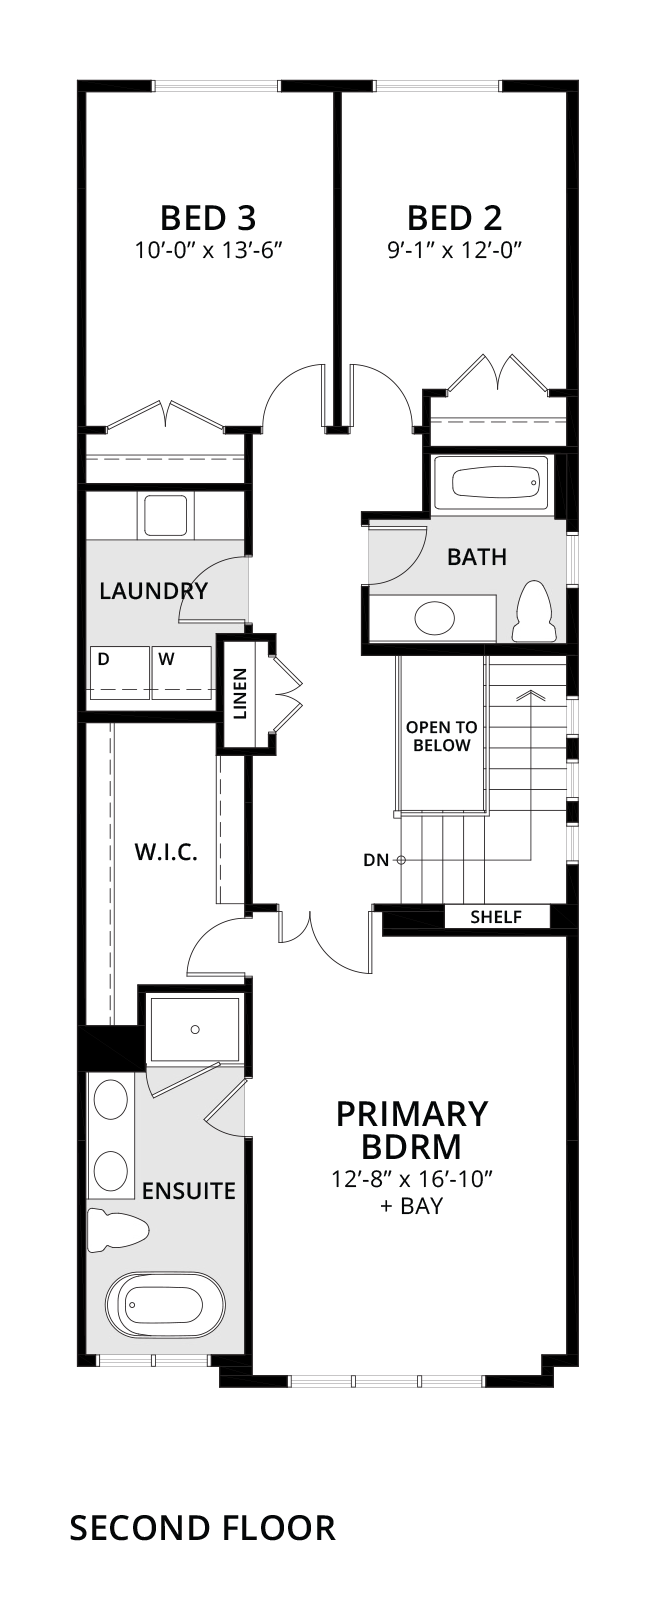 Second Floor layout